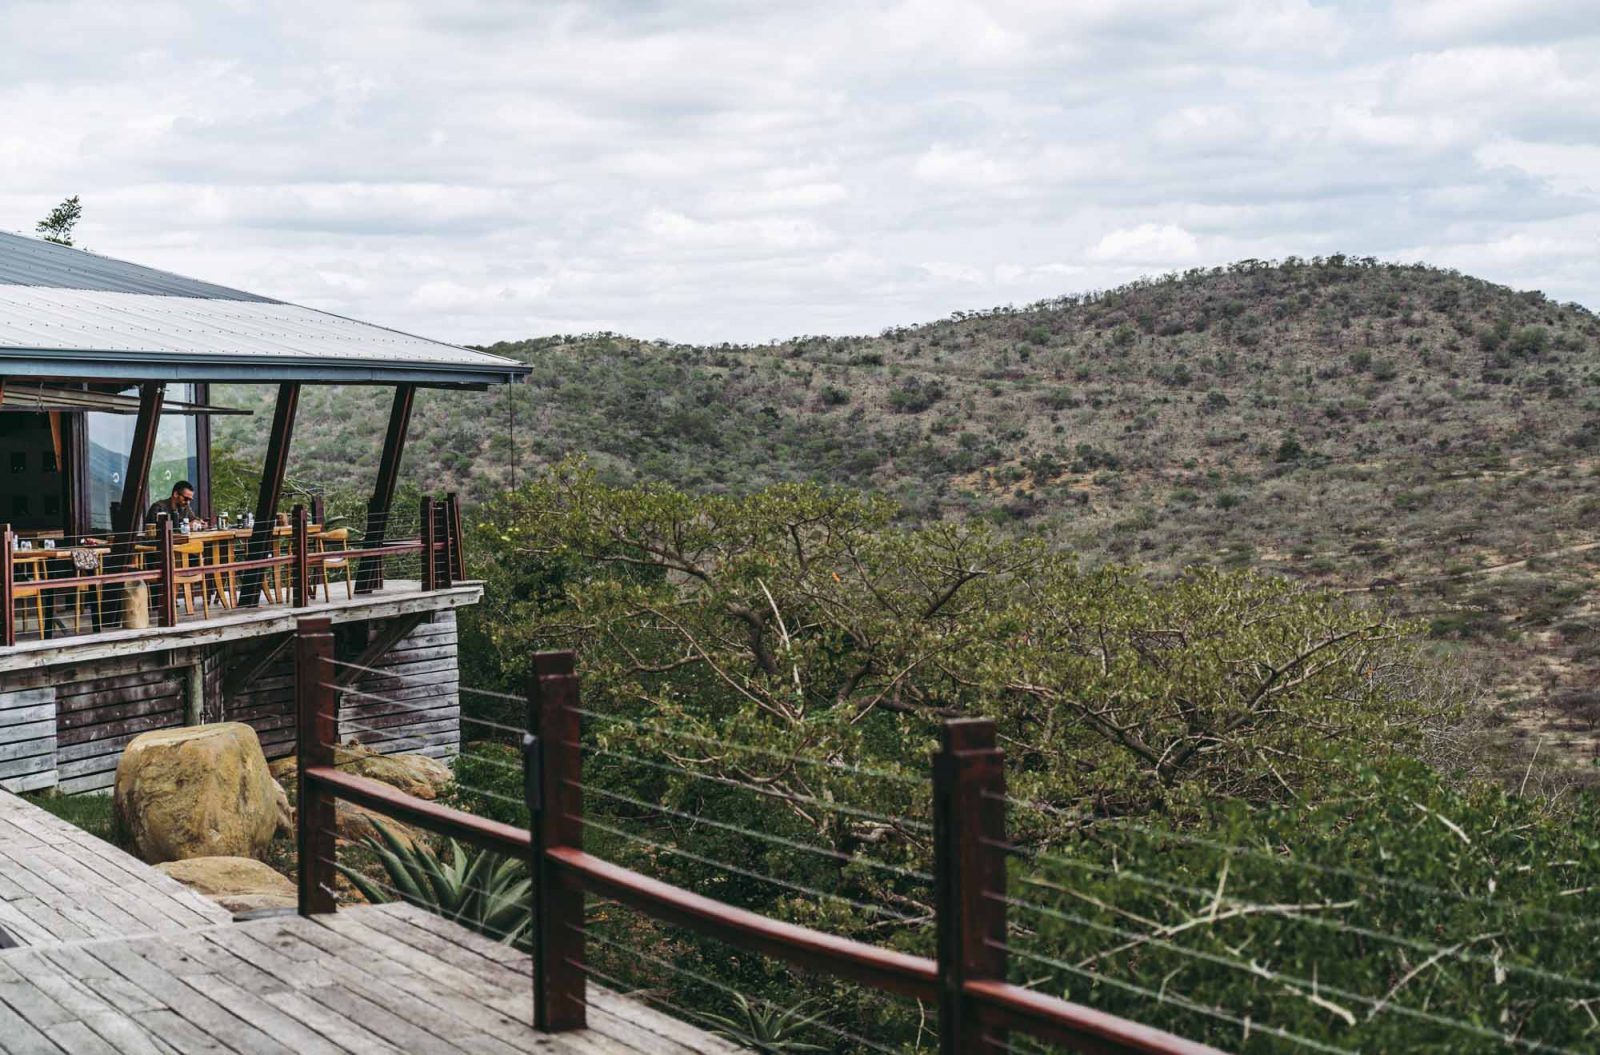 The deck at Rhino Ridge Safari Lodge in Hluhluwe iMfolozi National Park, safari lodges in South Africa